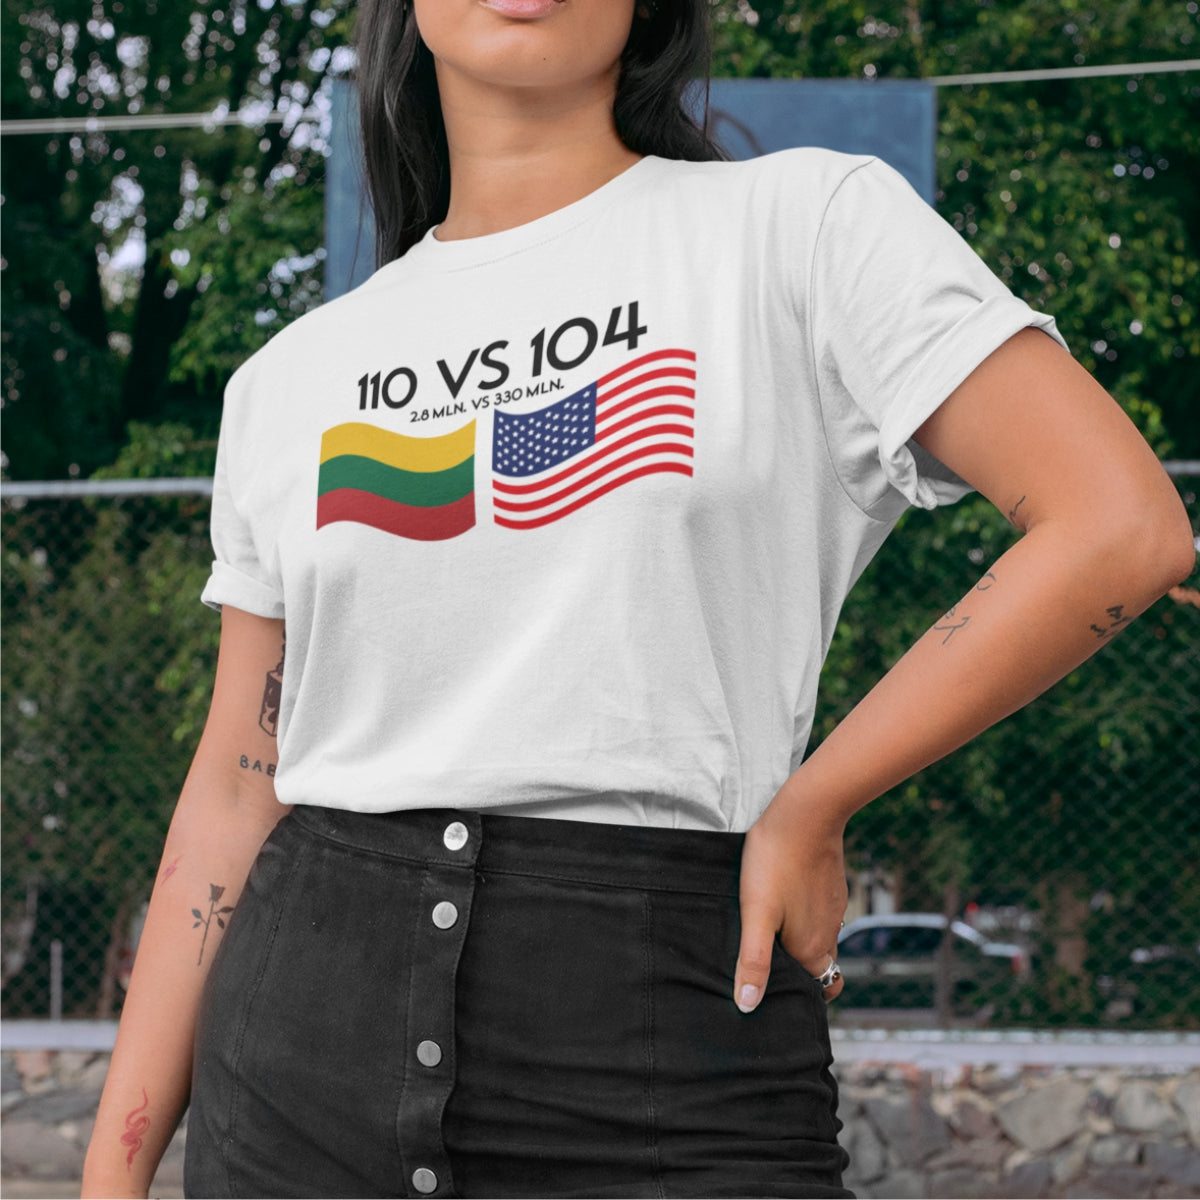 Balti UNISEX marškinėliai "LT vs JAV"